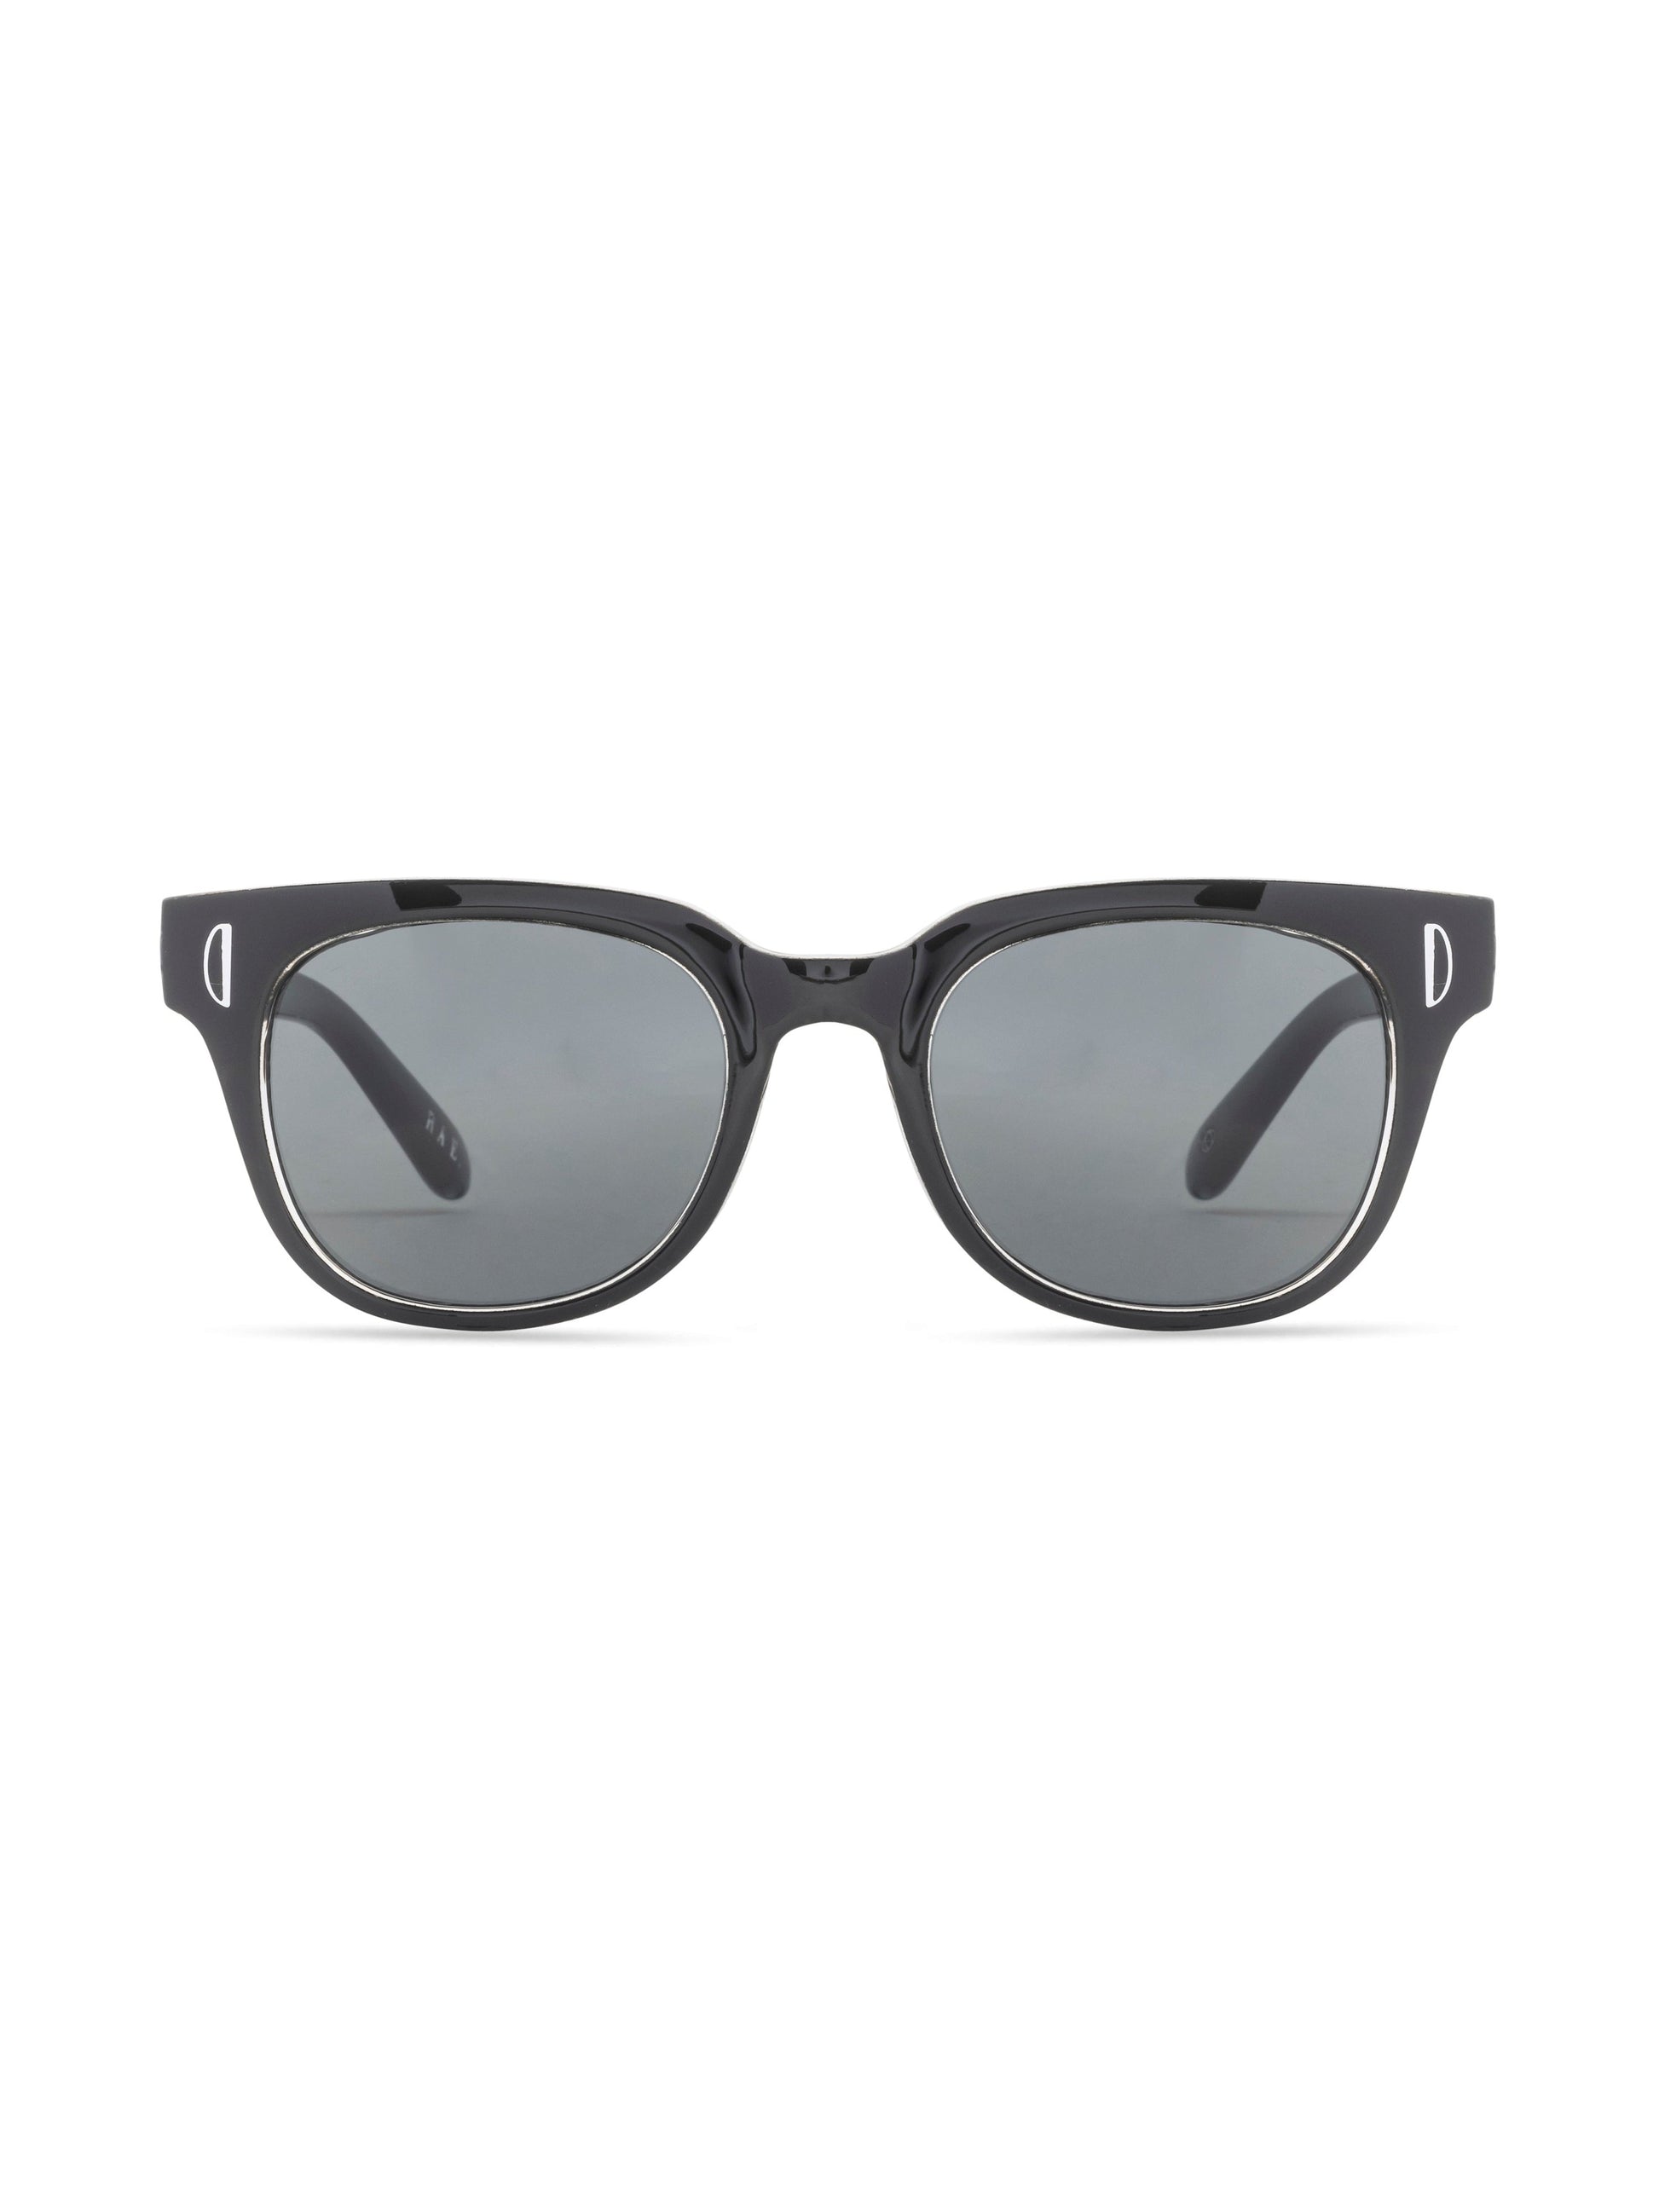 WADE Premium Sunglasses with "SHINE ON" Signature Font - Rae Dunn Wear